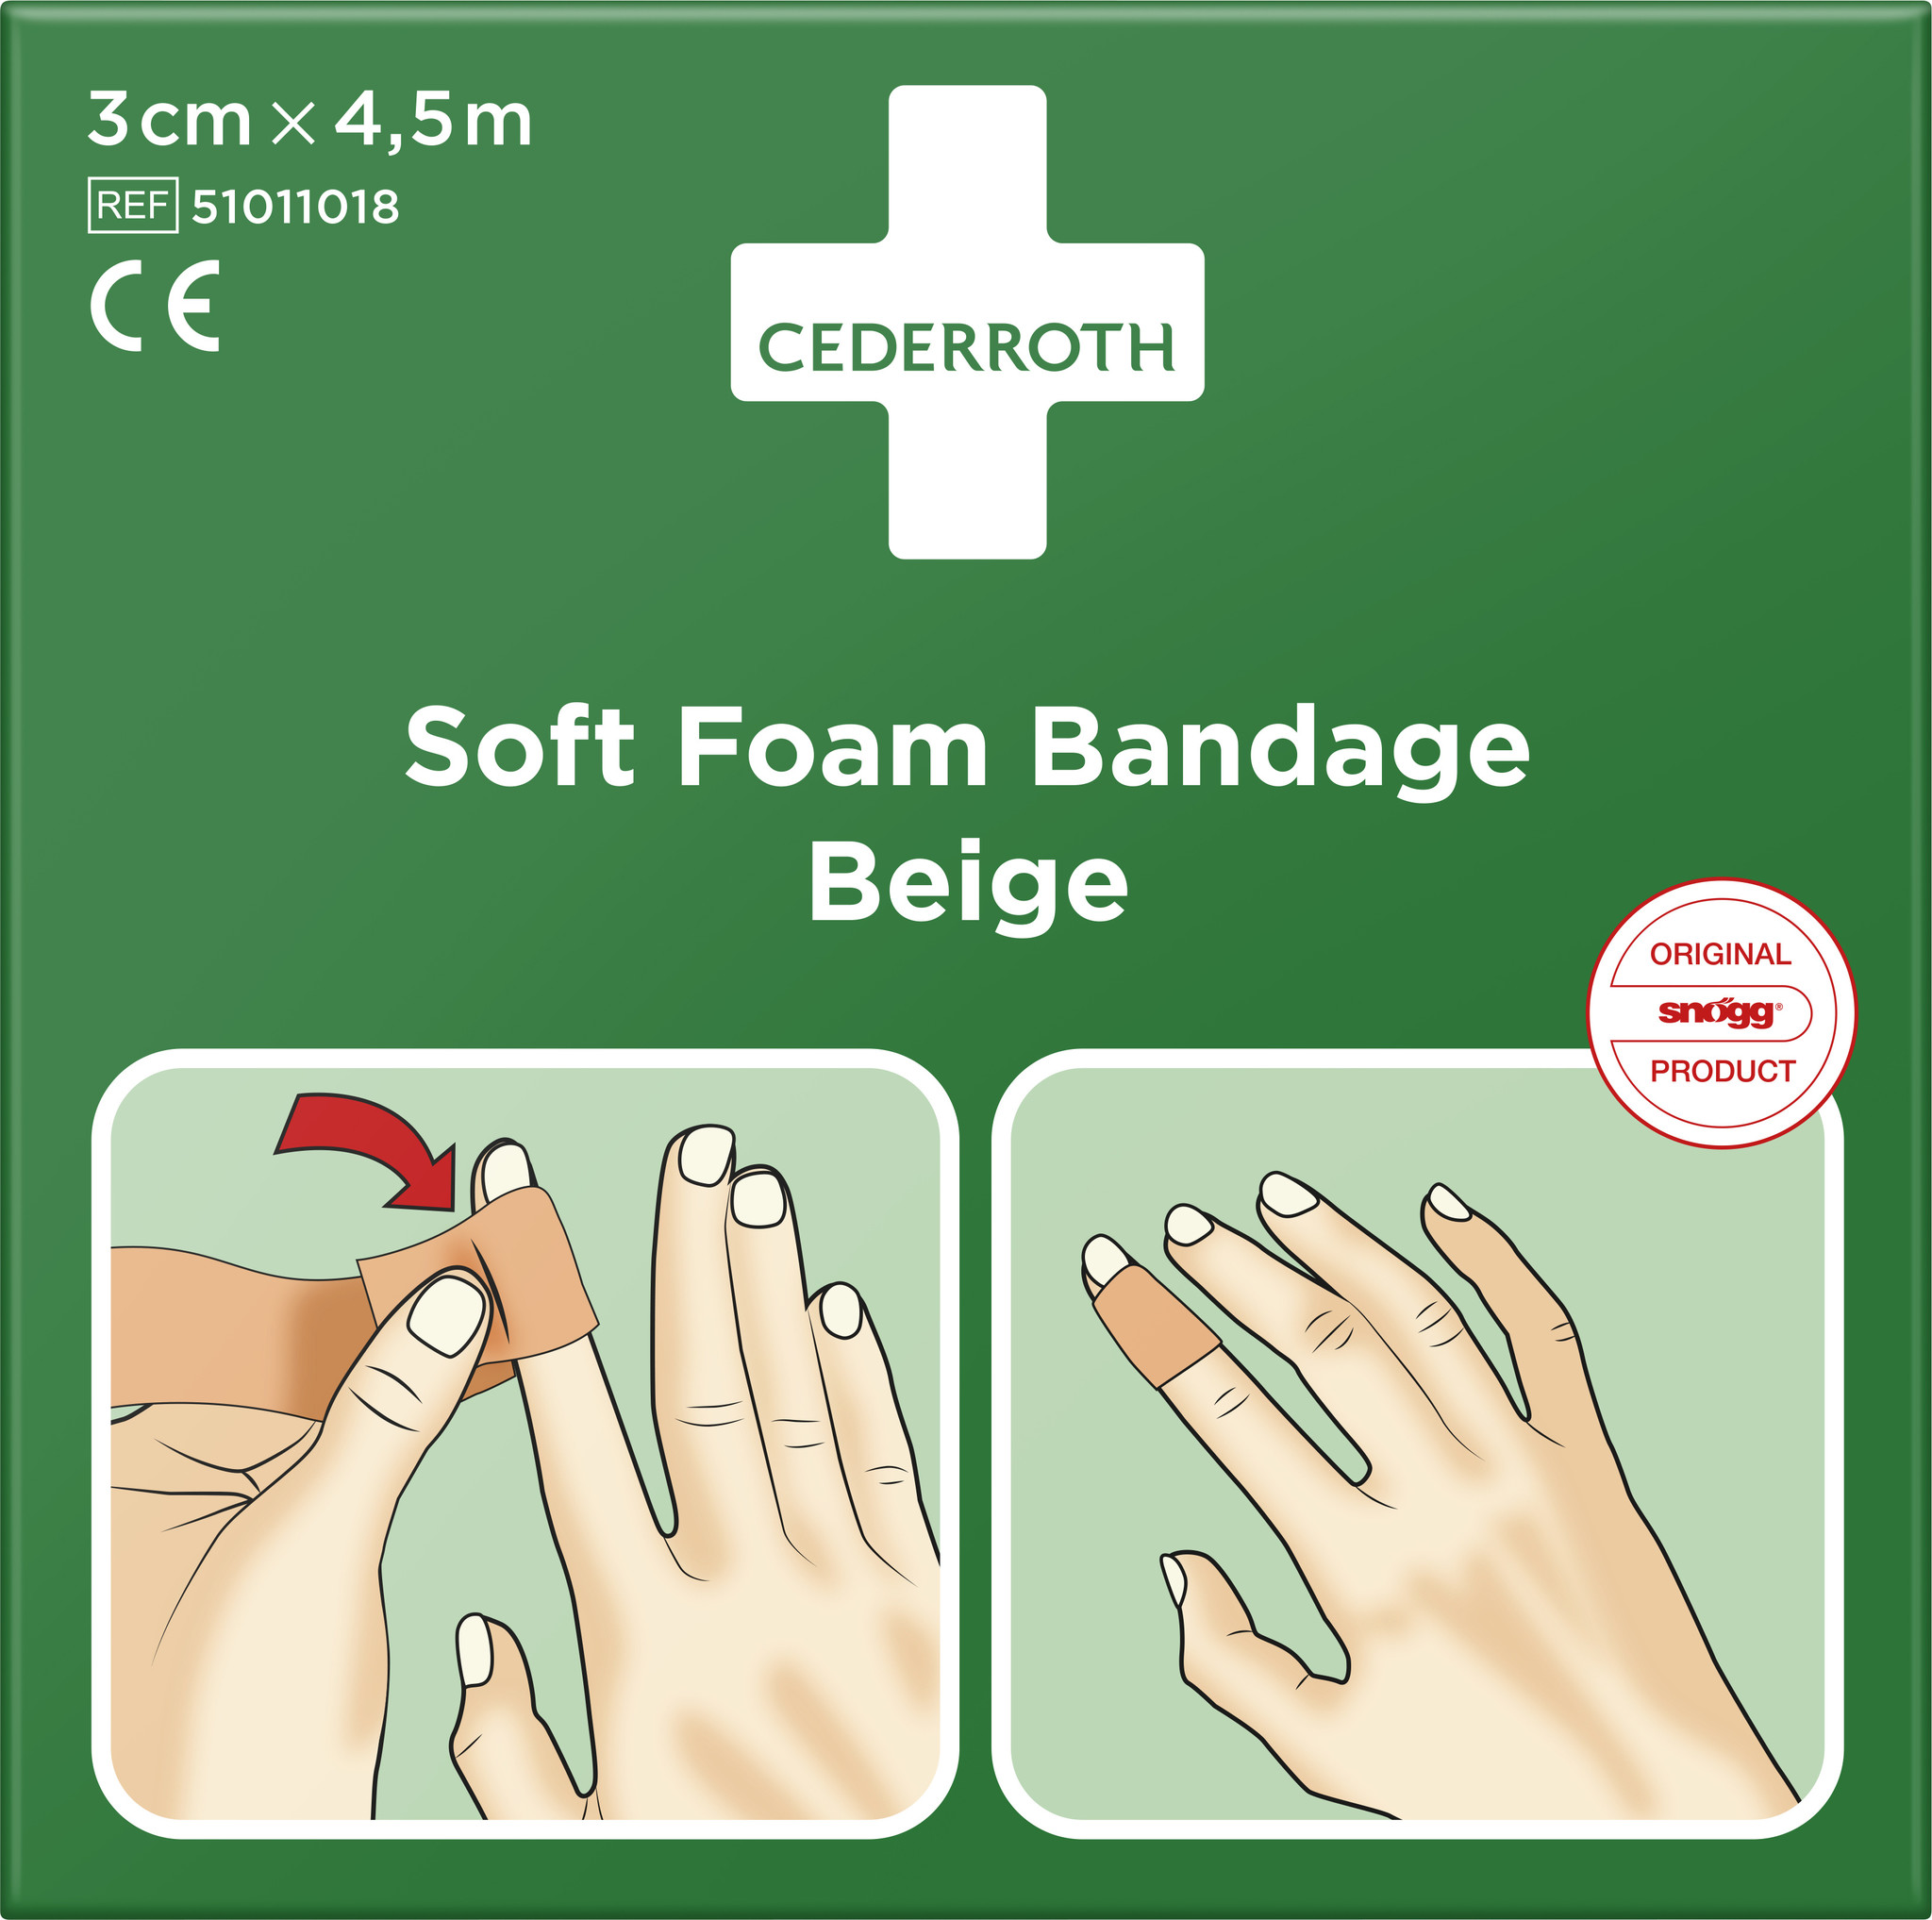 Zuiver escort bossen Cederroth Soft Foam Bandage Beige - 3 cm x 4,5 m (1 box) - EVAC